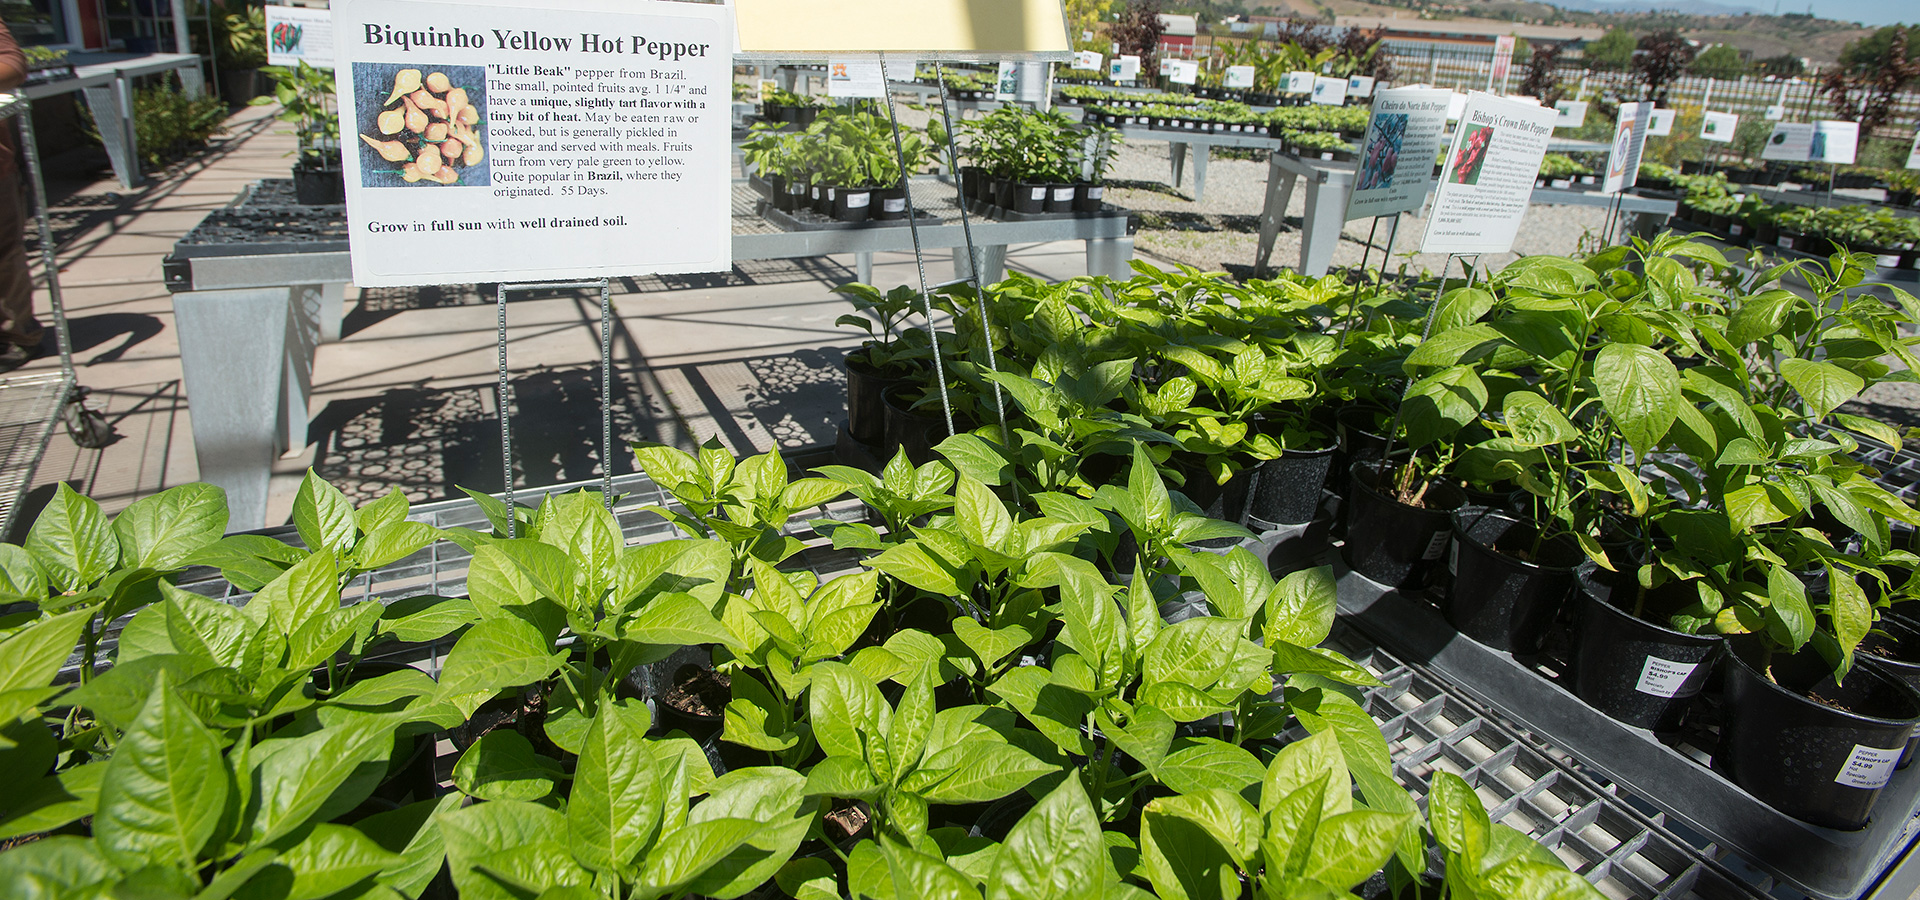 Binquinho Yellow Hot Pepper plants